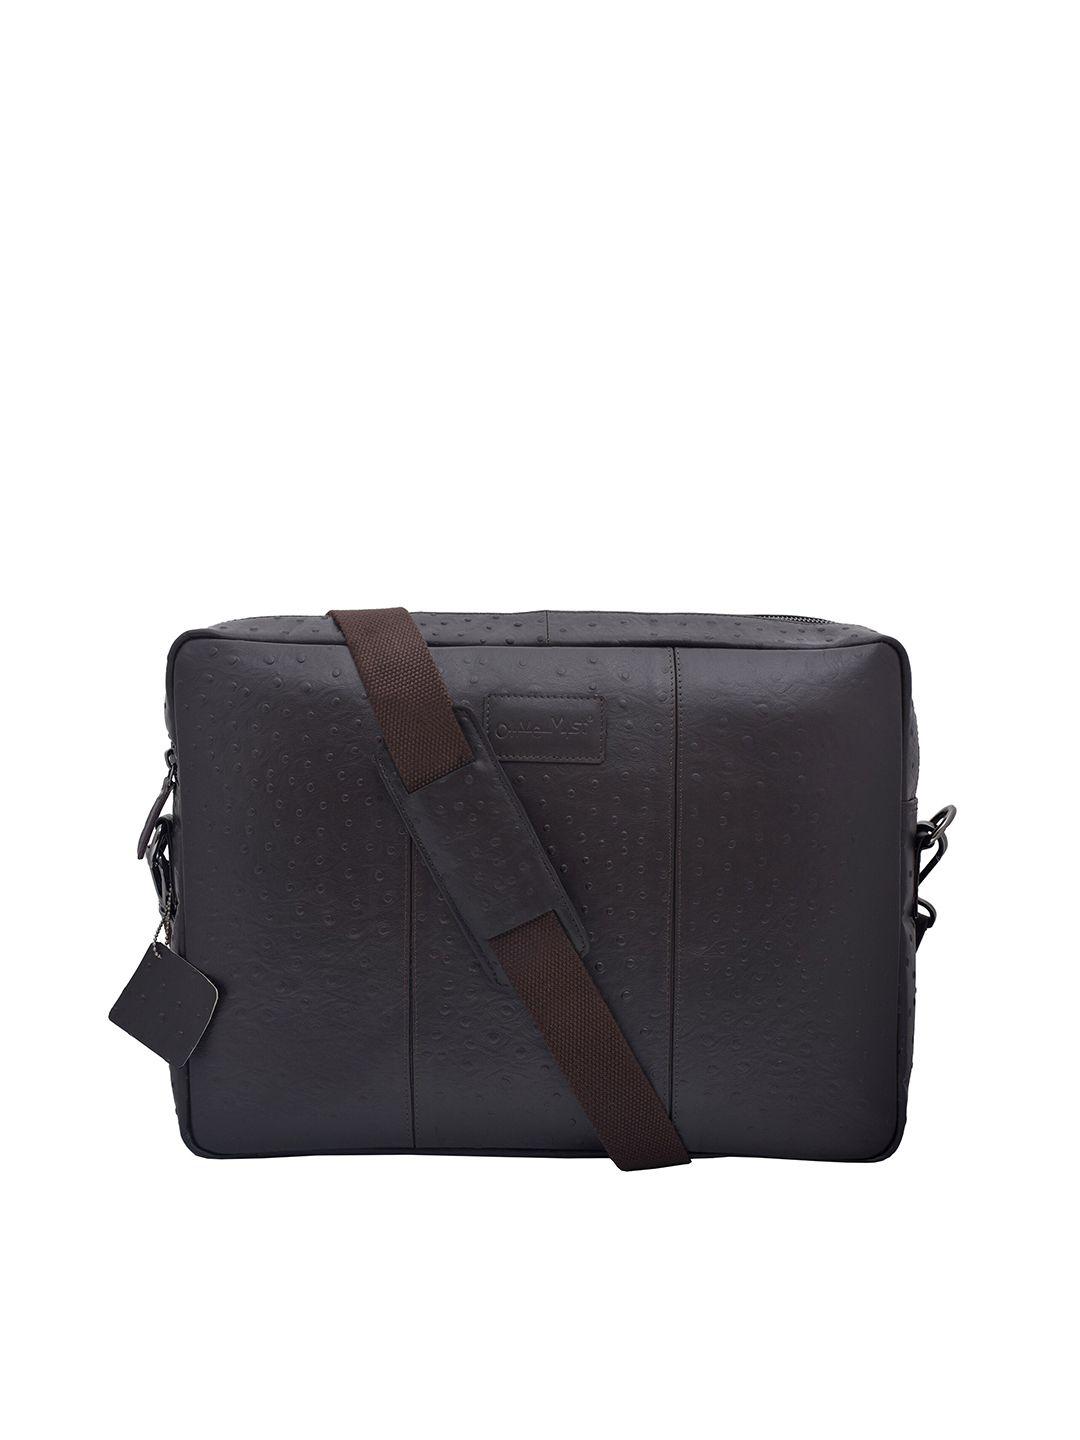 olive mist unisex brown textured leather laptop bag